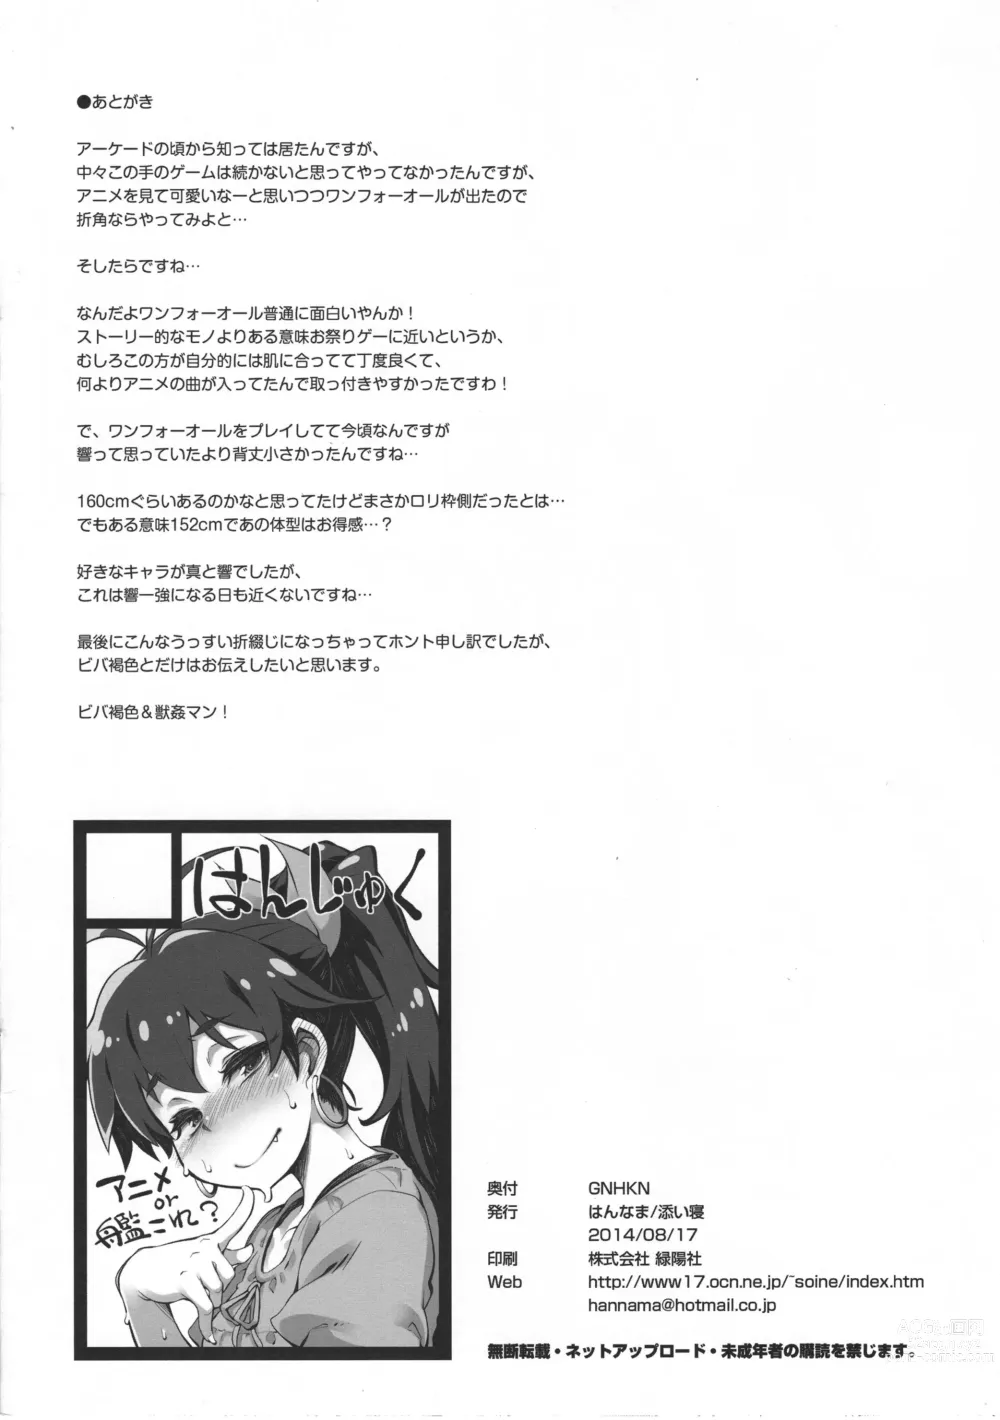 Page 9 of doujinshi GNHKN